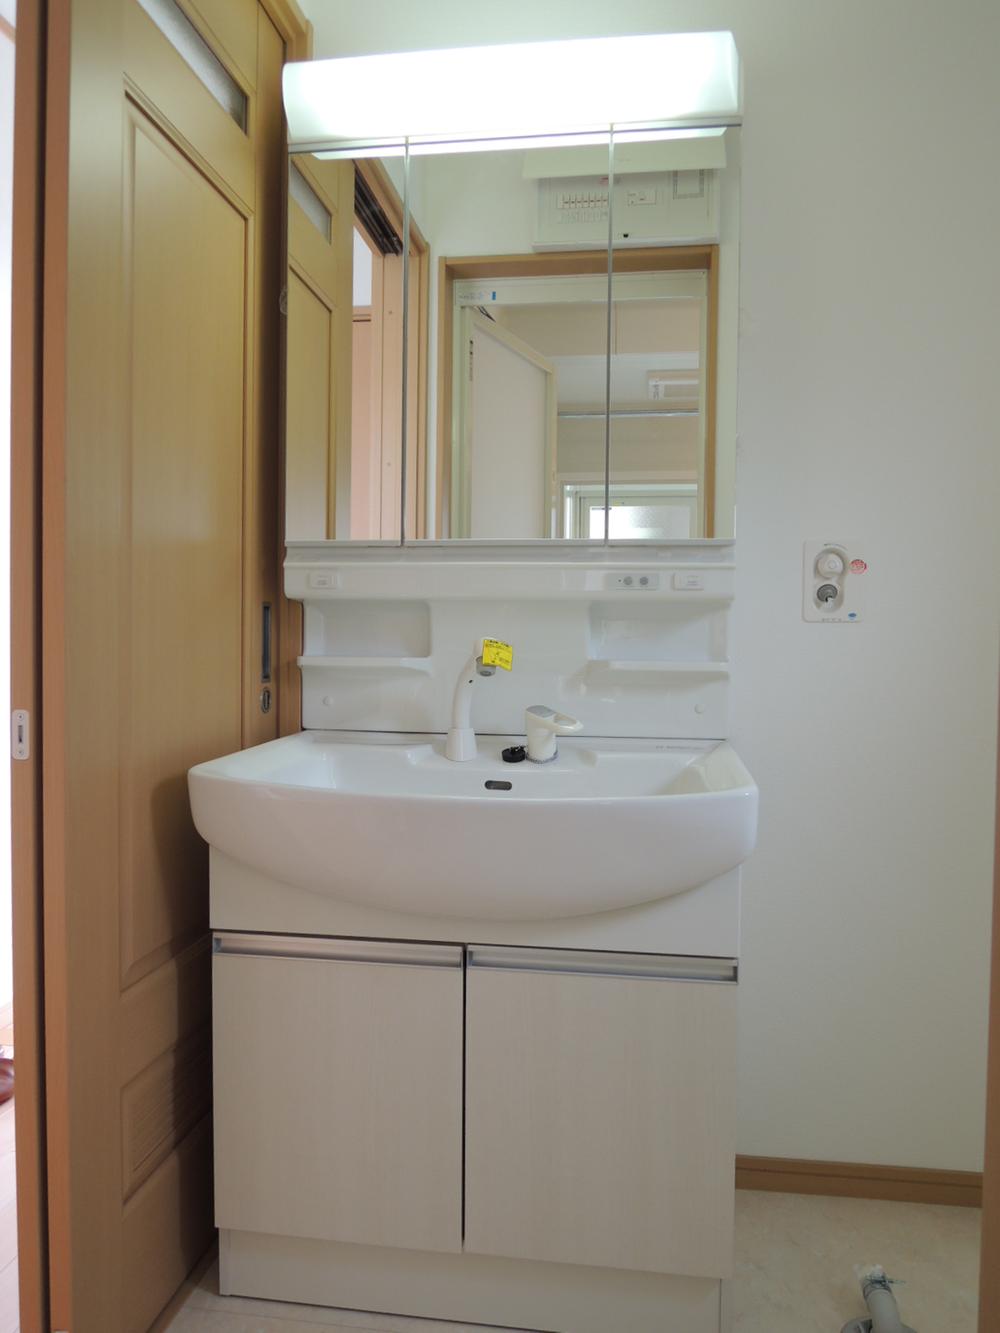 Wash basin, toilet. Three-sided mirror vanity